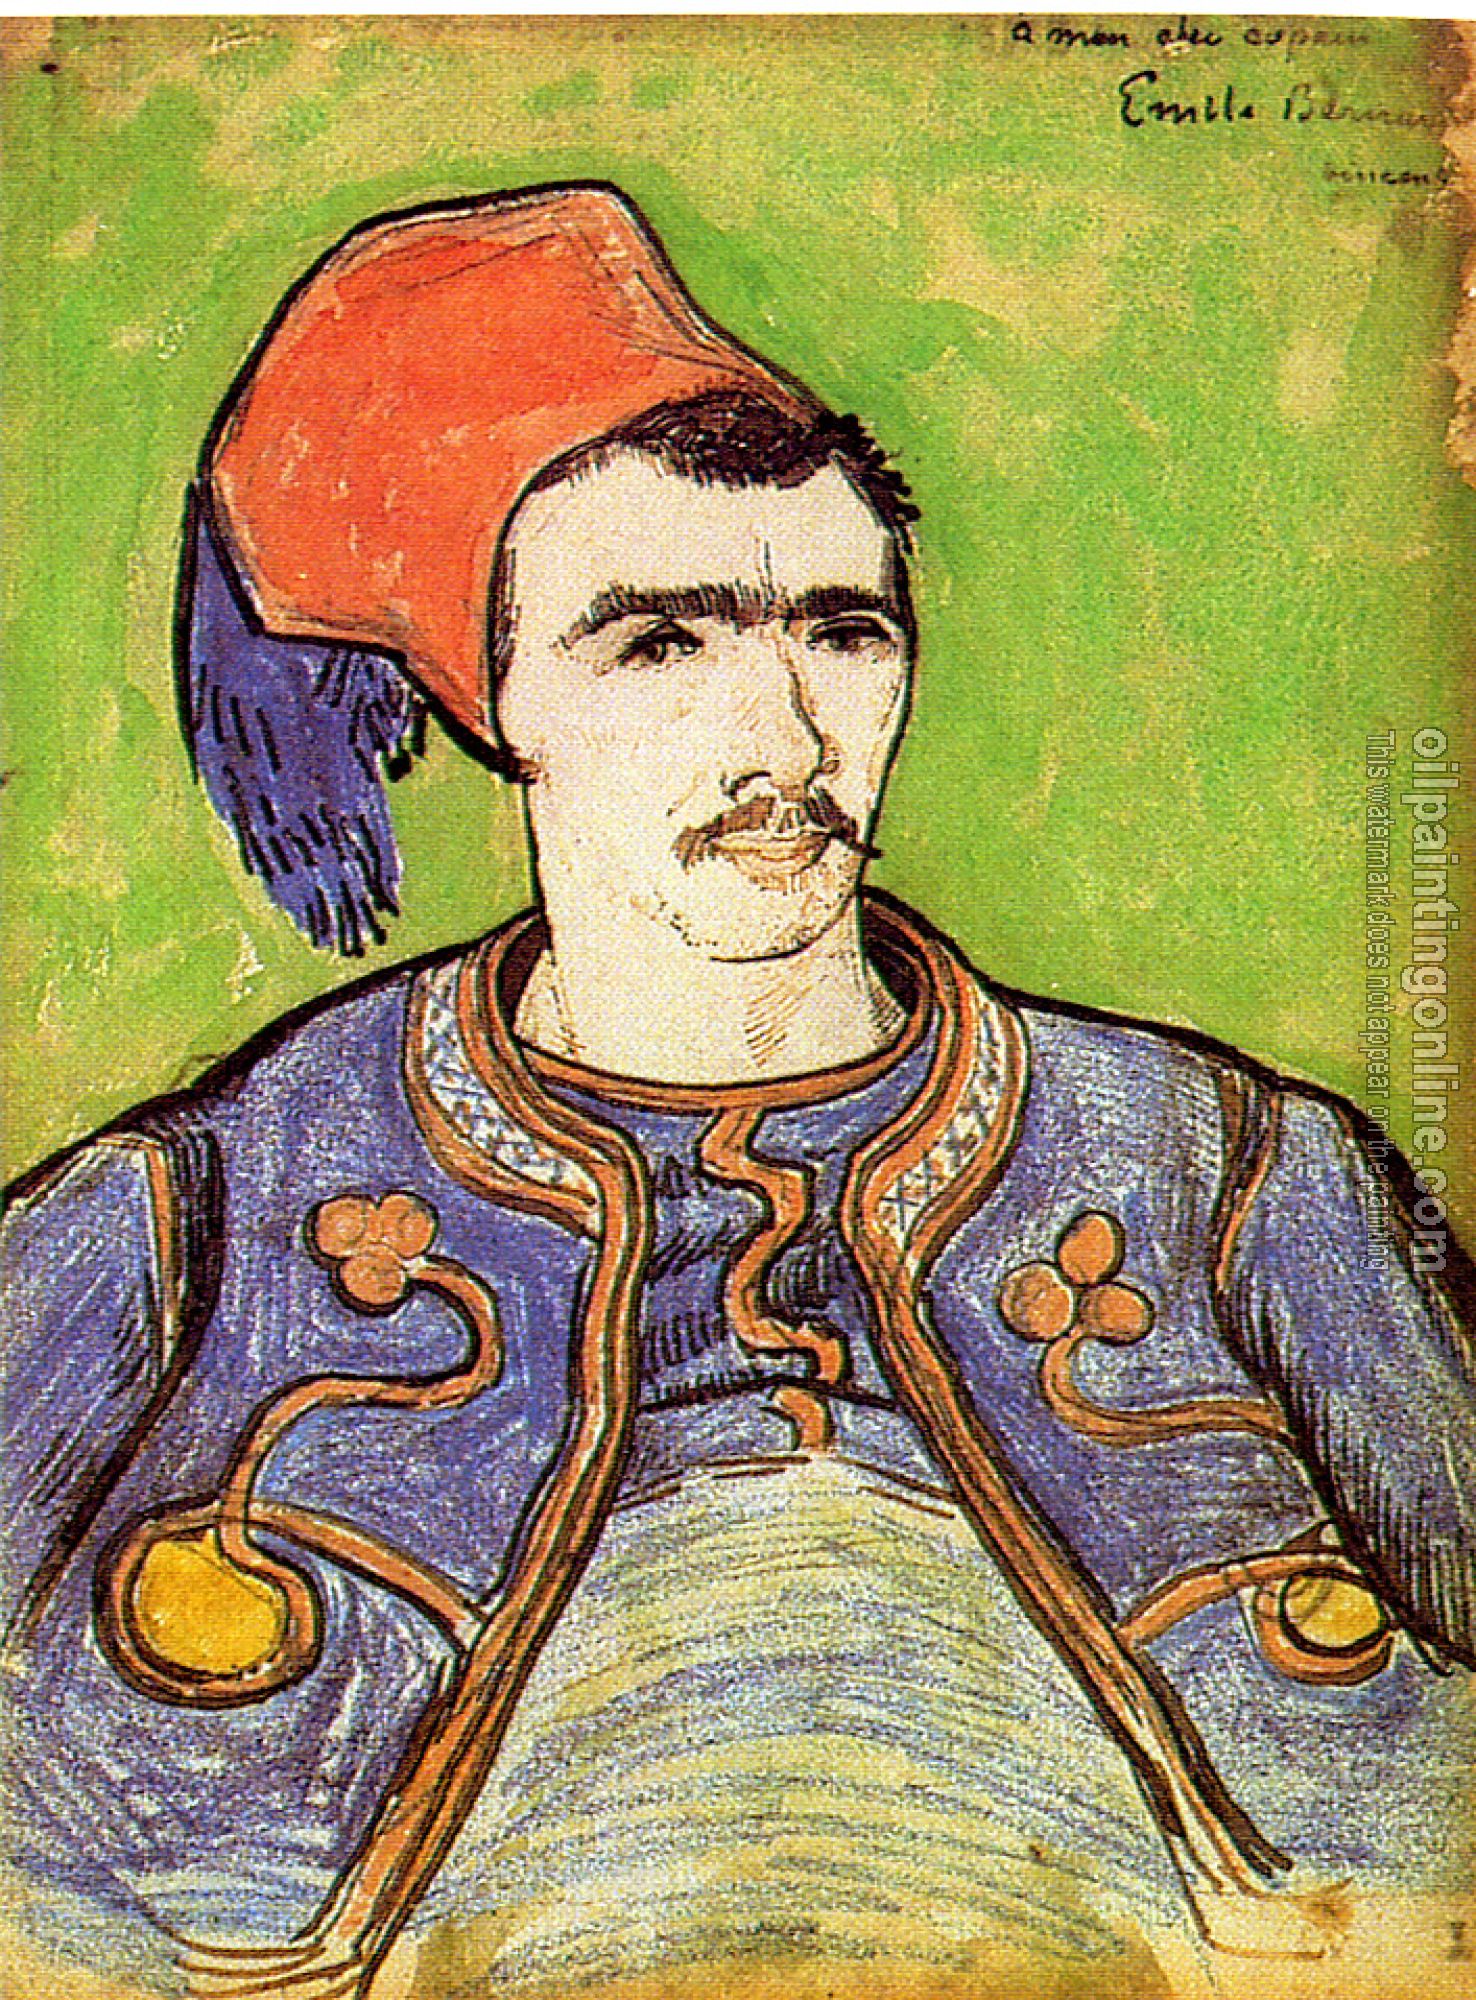 Gogh, Vincent van - Zouave,Half-Figure